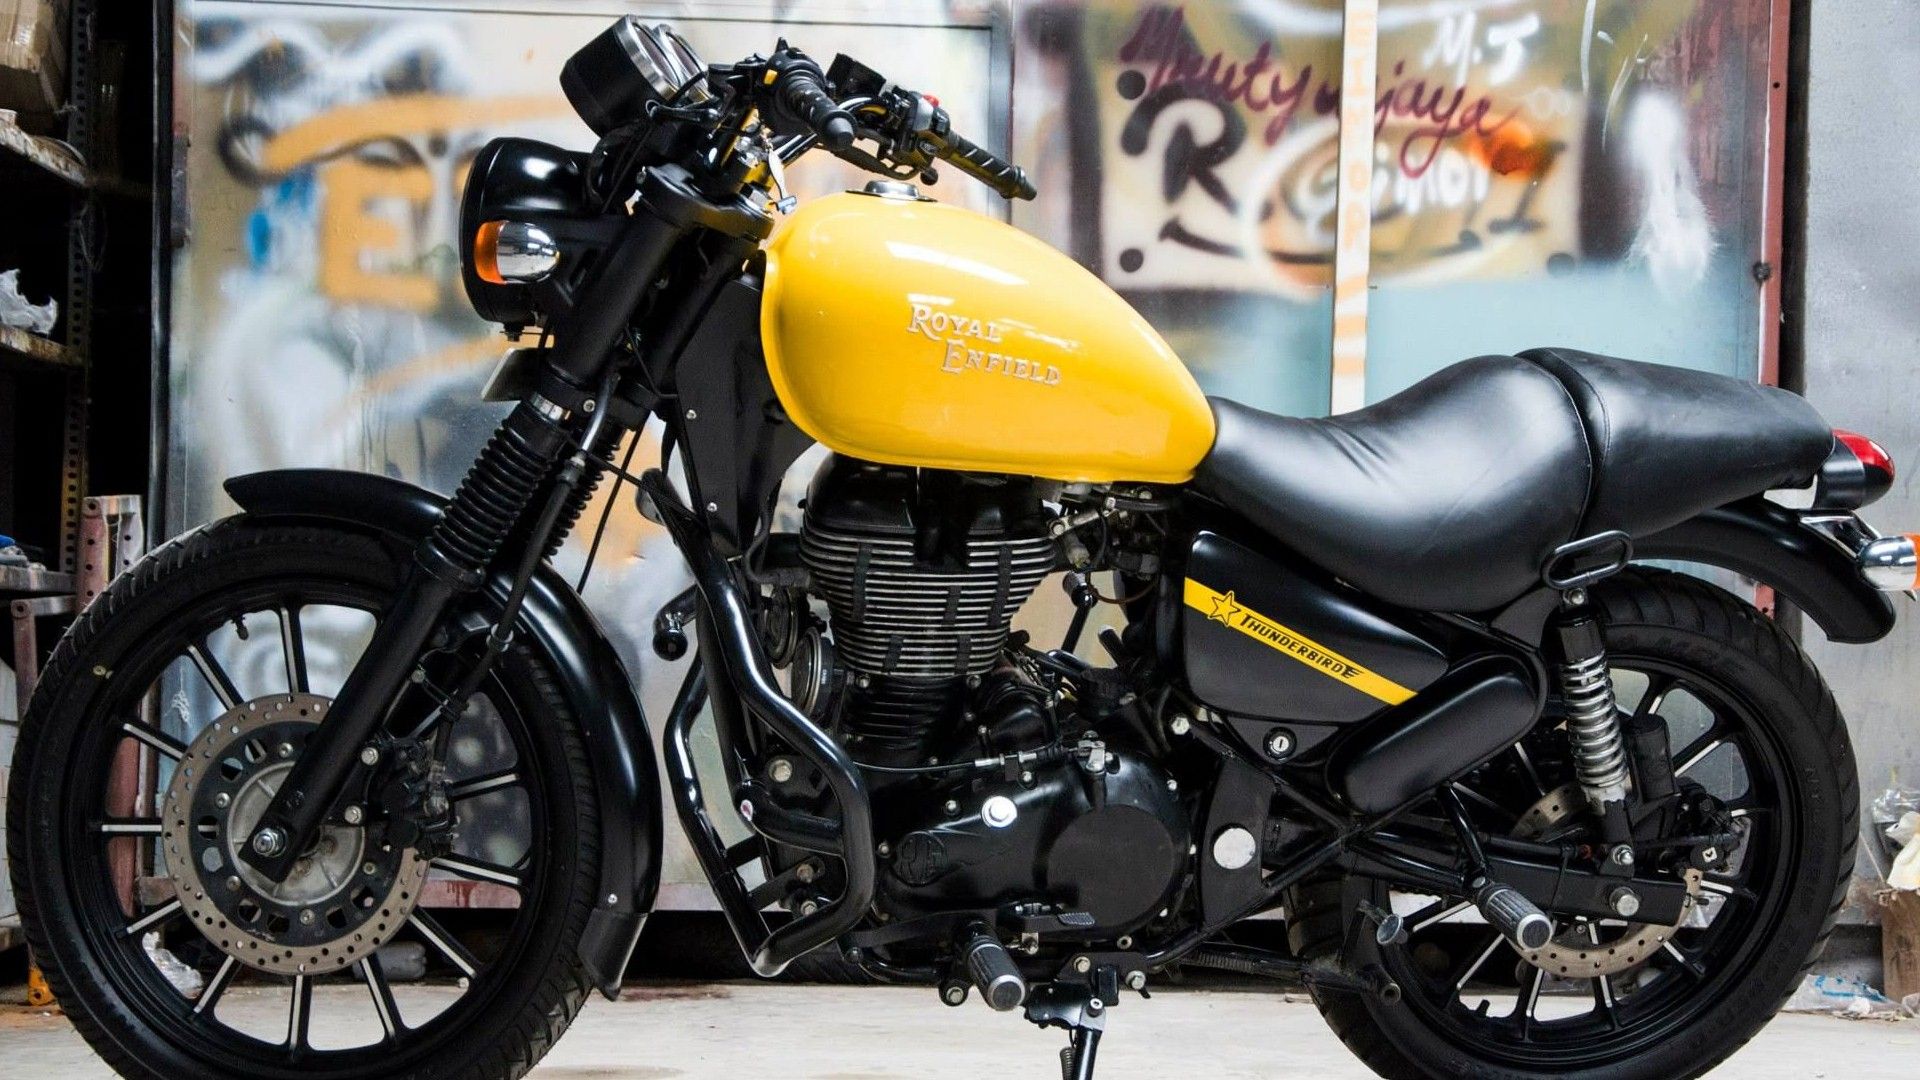 Royal Enfield Thunderbird 500X Yellow Motorcycle